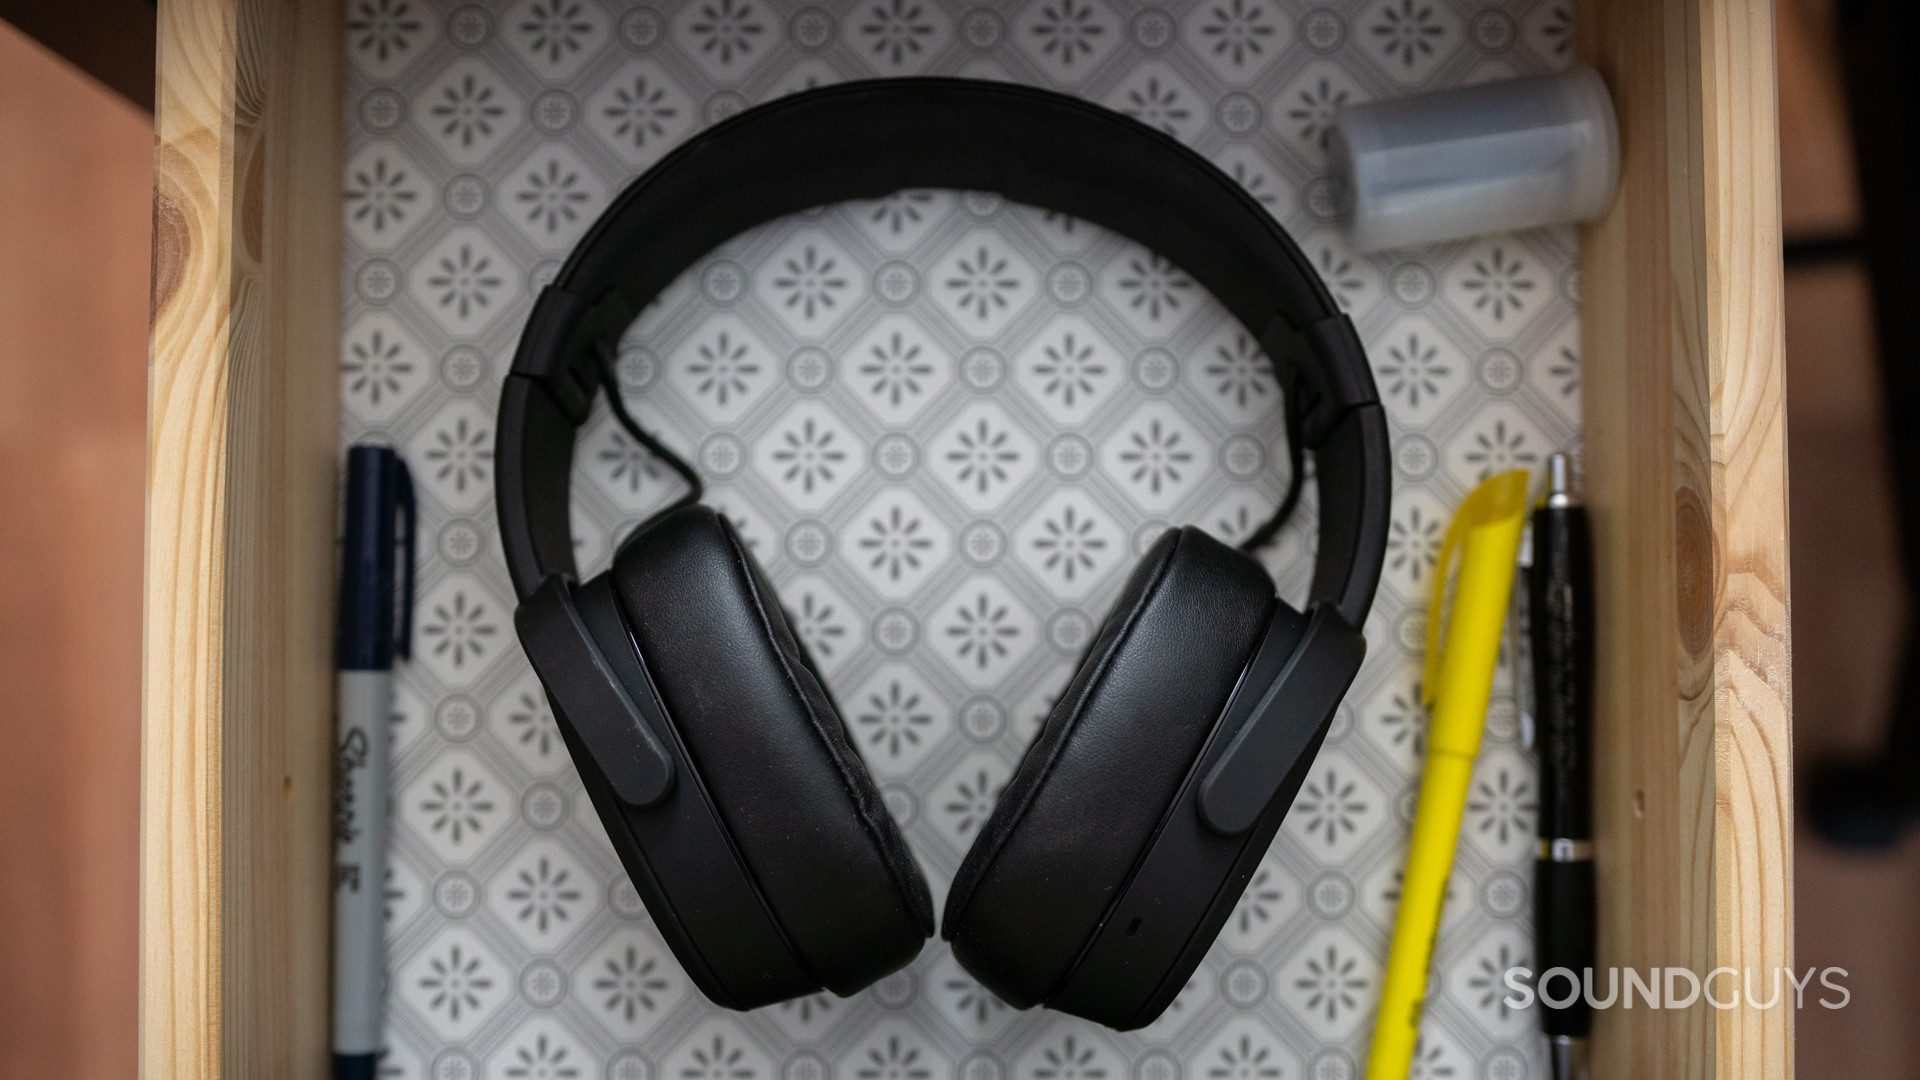 The Skullcandy Crusher Wireless headphones in a drawer.